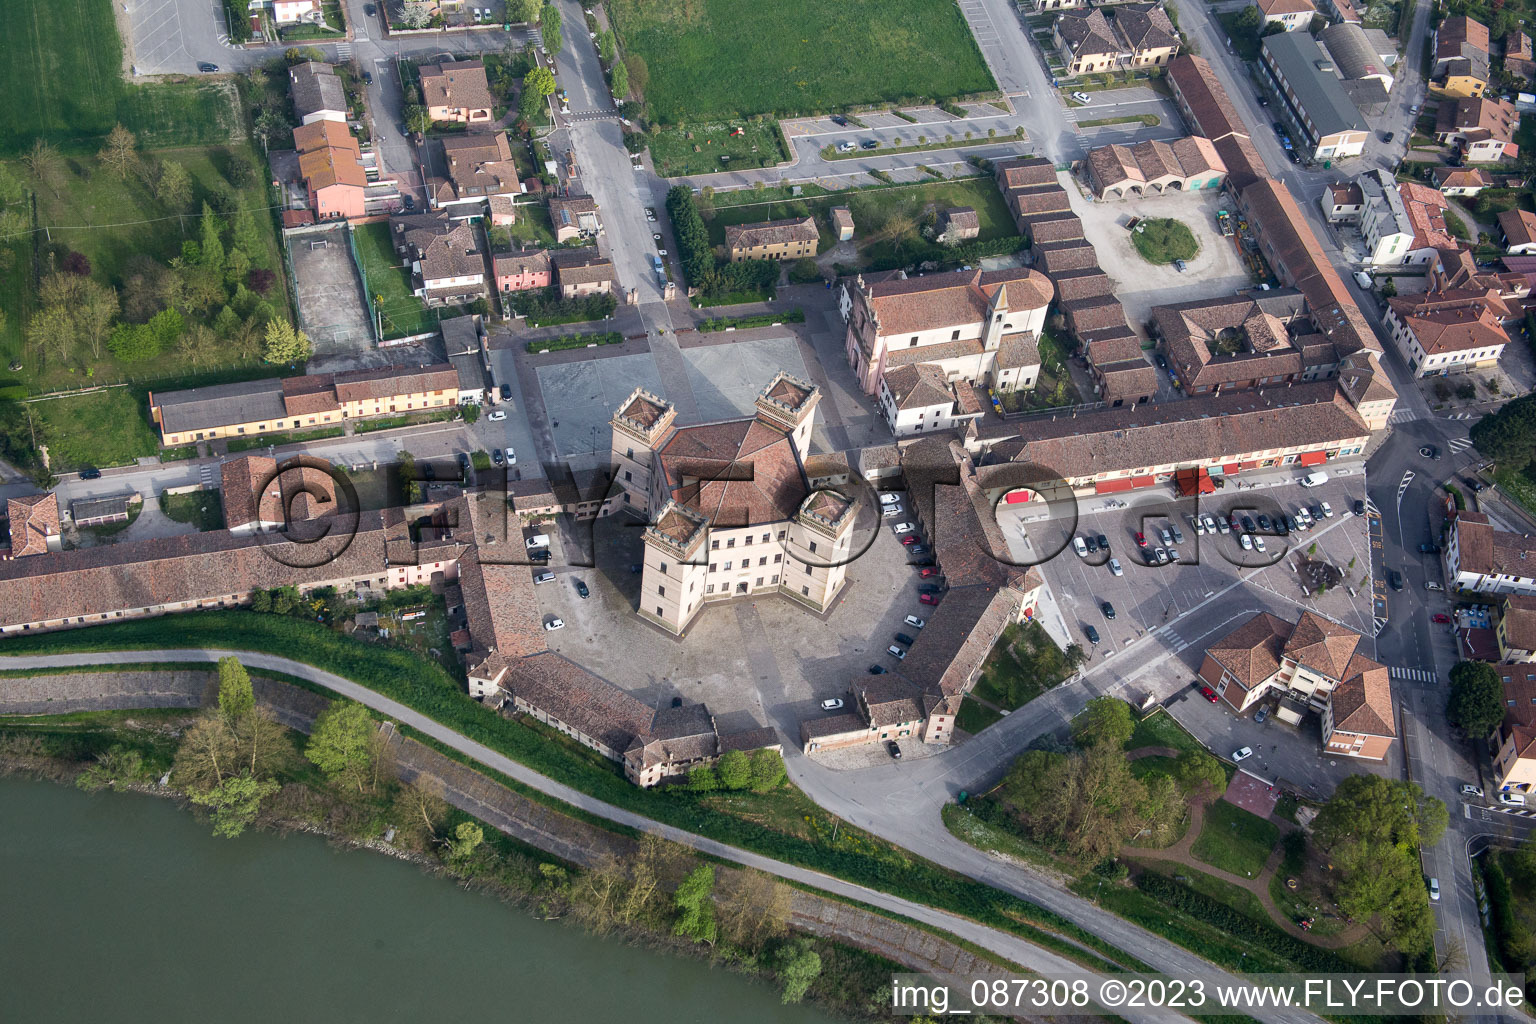 Mesola im Bundesland Emilia-Romagna, Italien aus der Drohnenperspektive